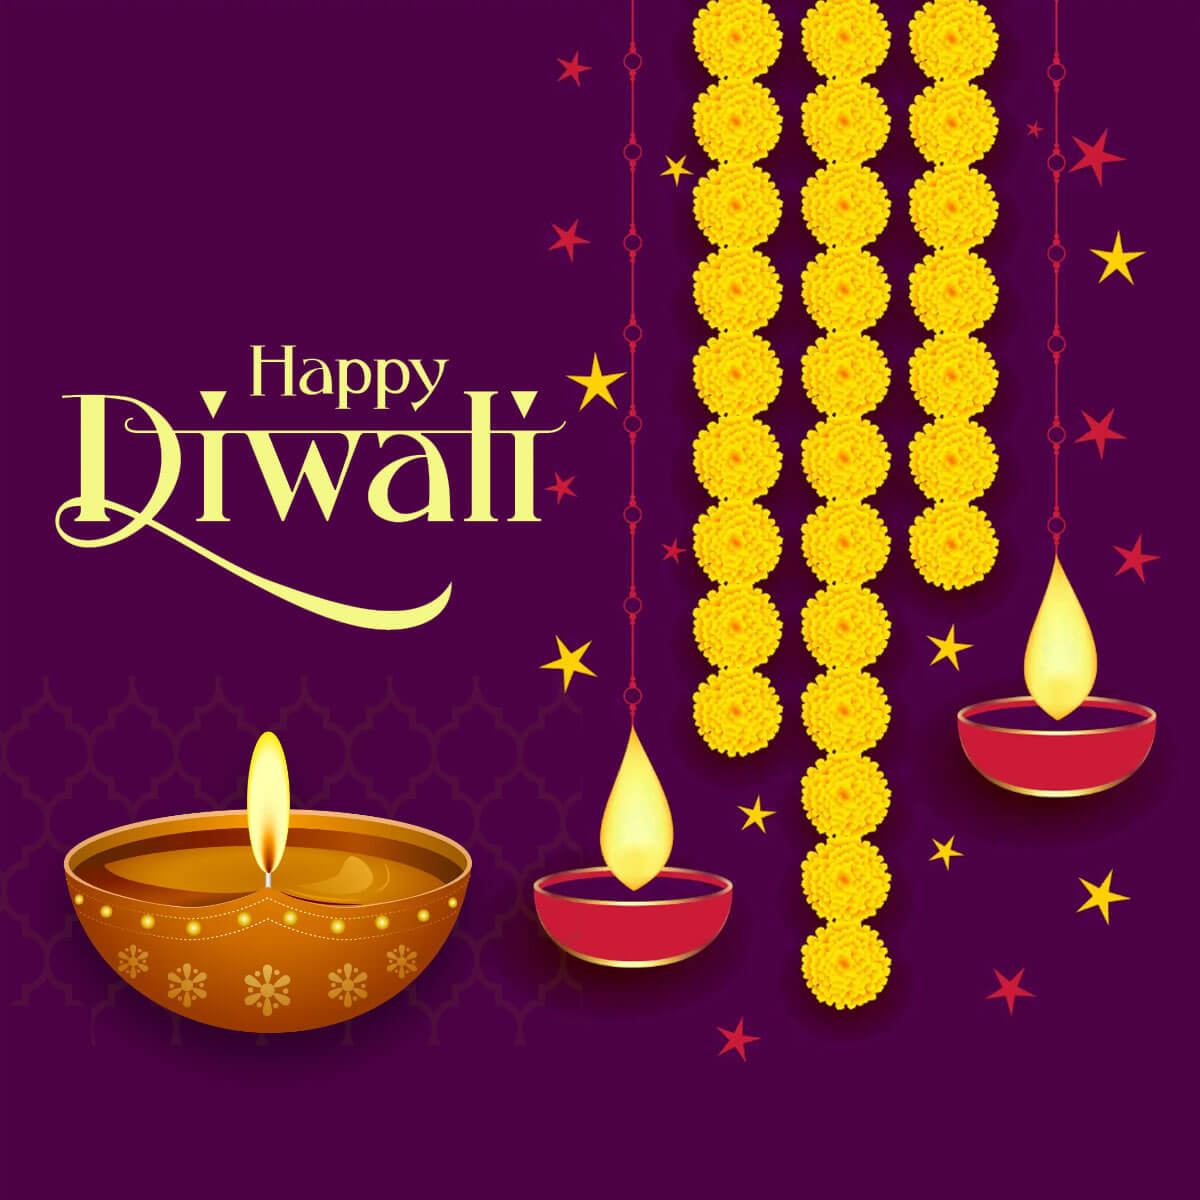 Happy diwali flowers diya decoration banner design image